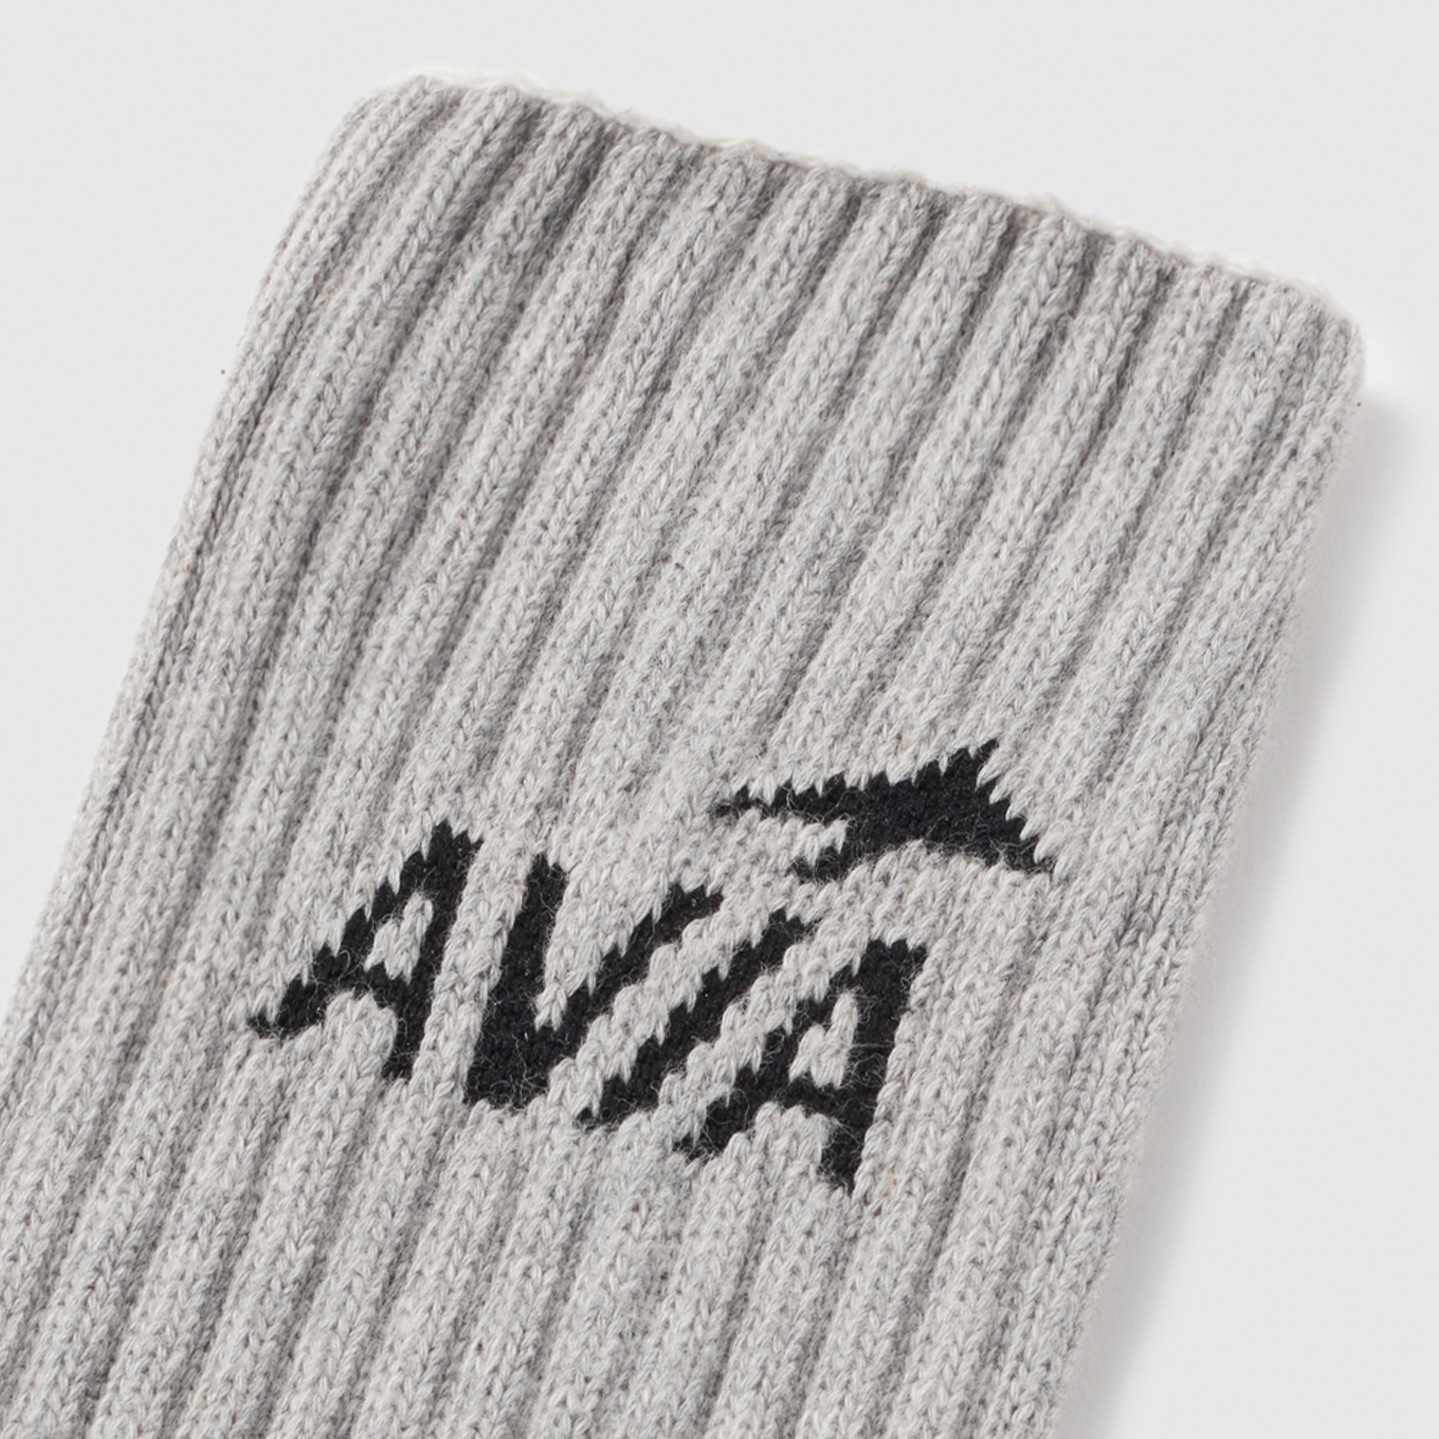 Avia Classic Logo Socks - Gray / Black